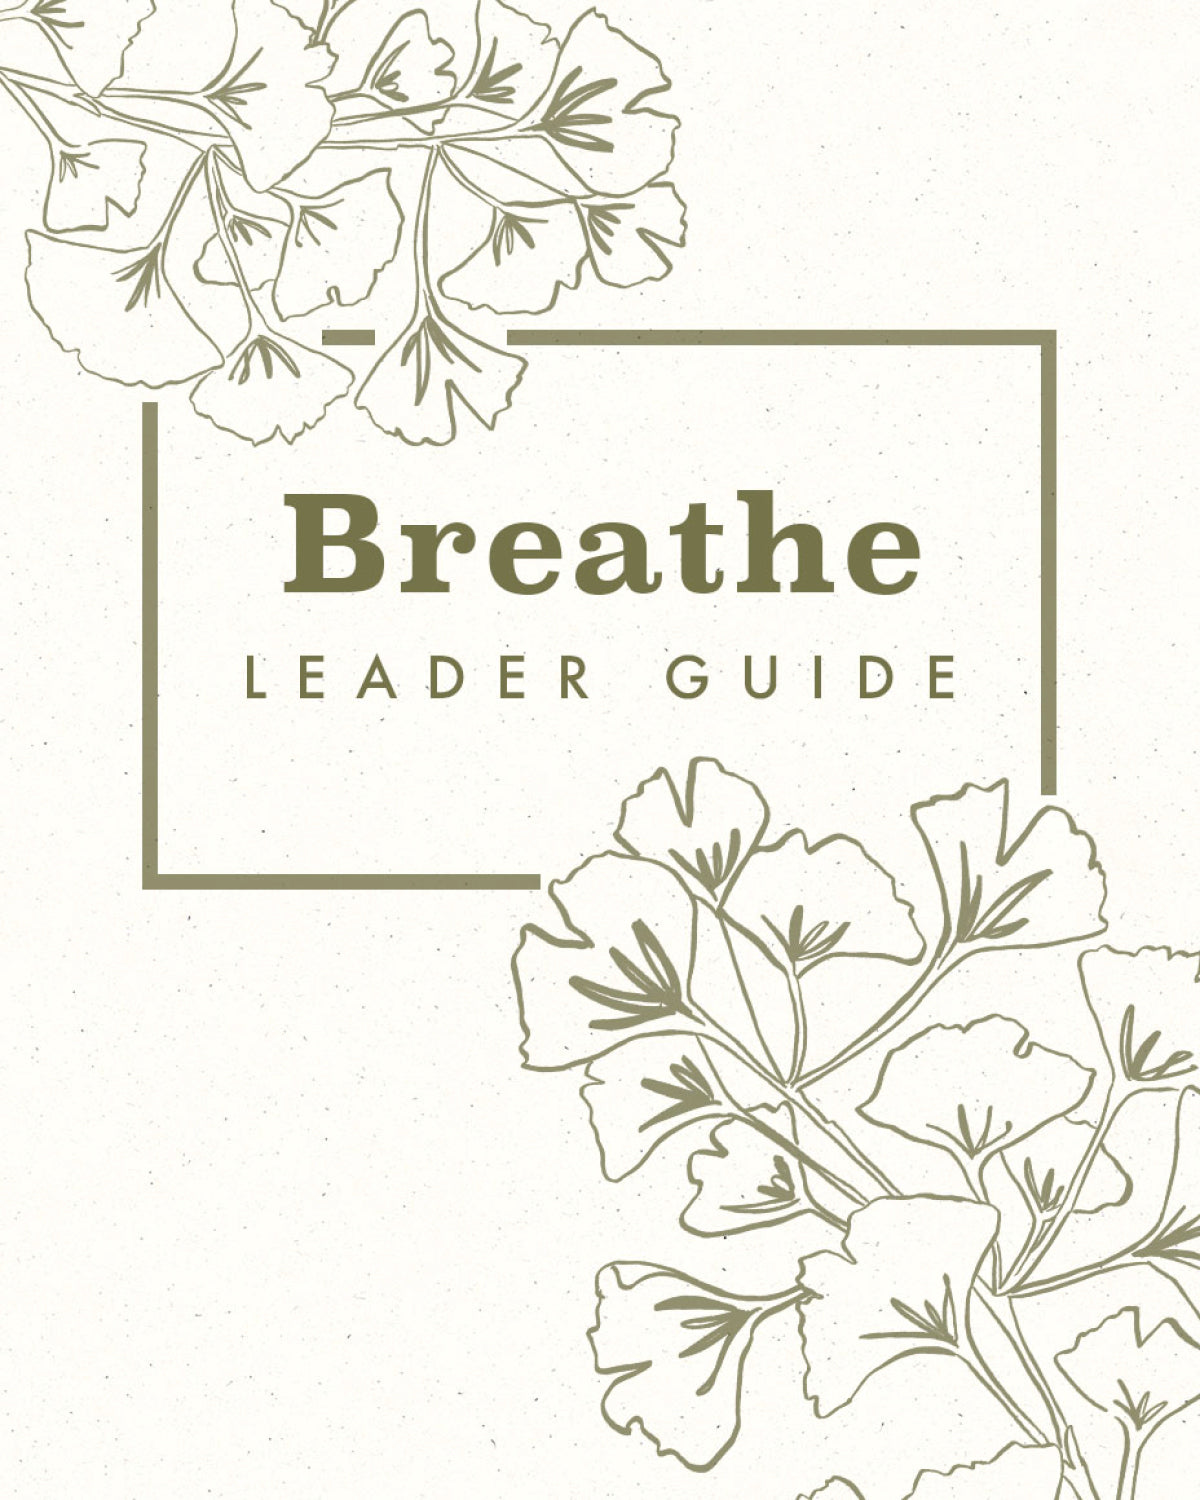 Breathe Leader Guide [FREE PDF]